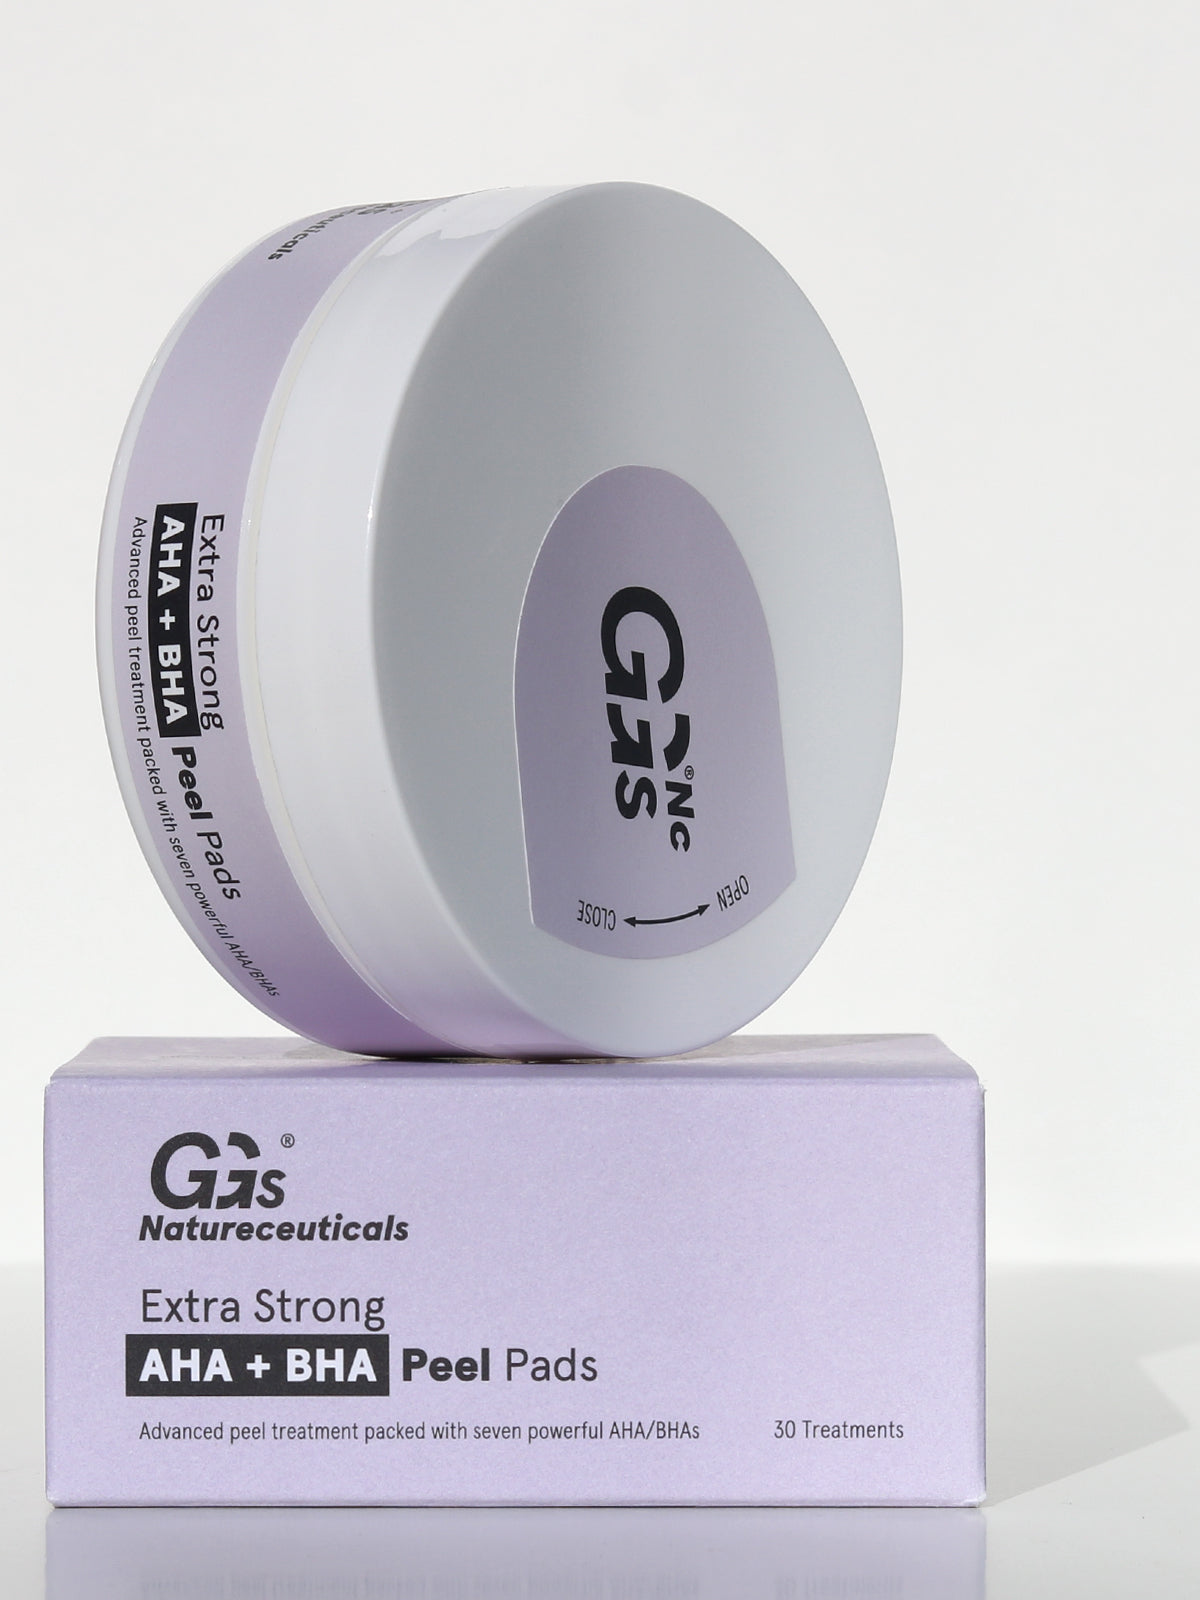 Extra Strong AHA + BHA Peel Pads - exfolierend für ebenmäßigen Hautton | GGs Natureceuticals